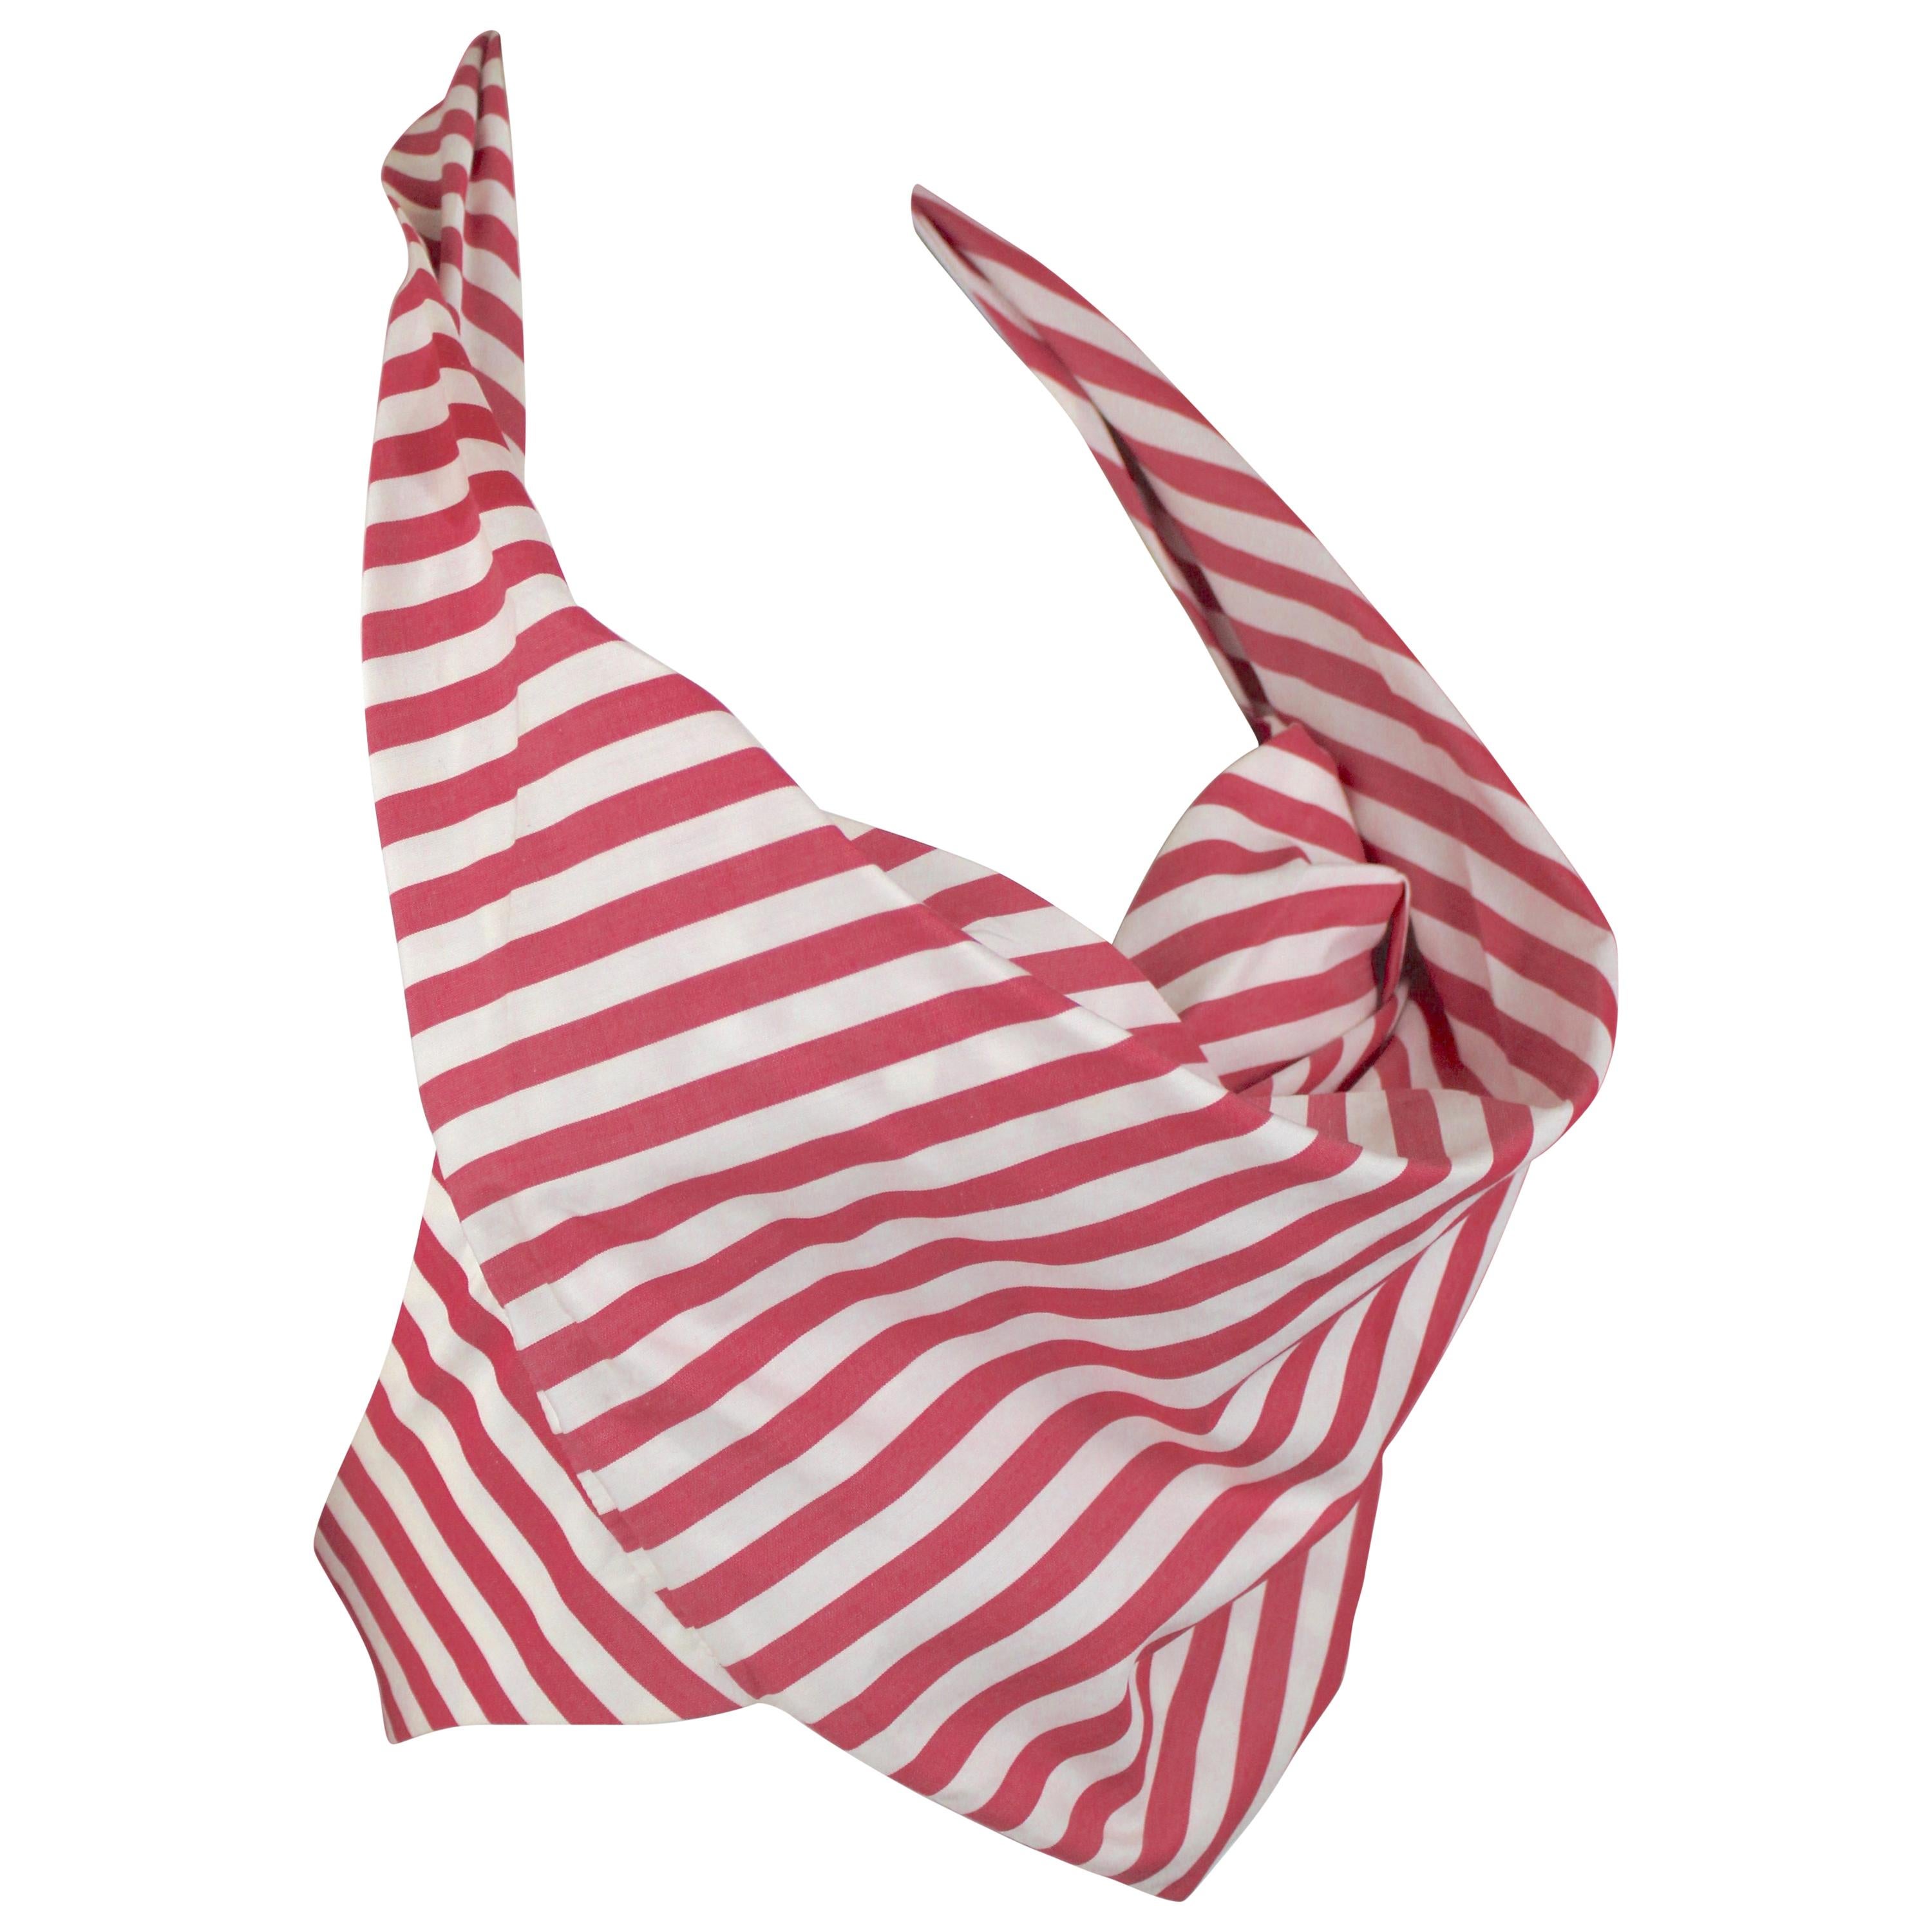 Vivienne Westwood Candy Stripe Halter top, c. 90's, Size 4 US For Sale